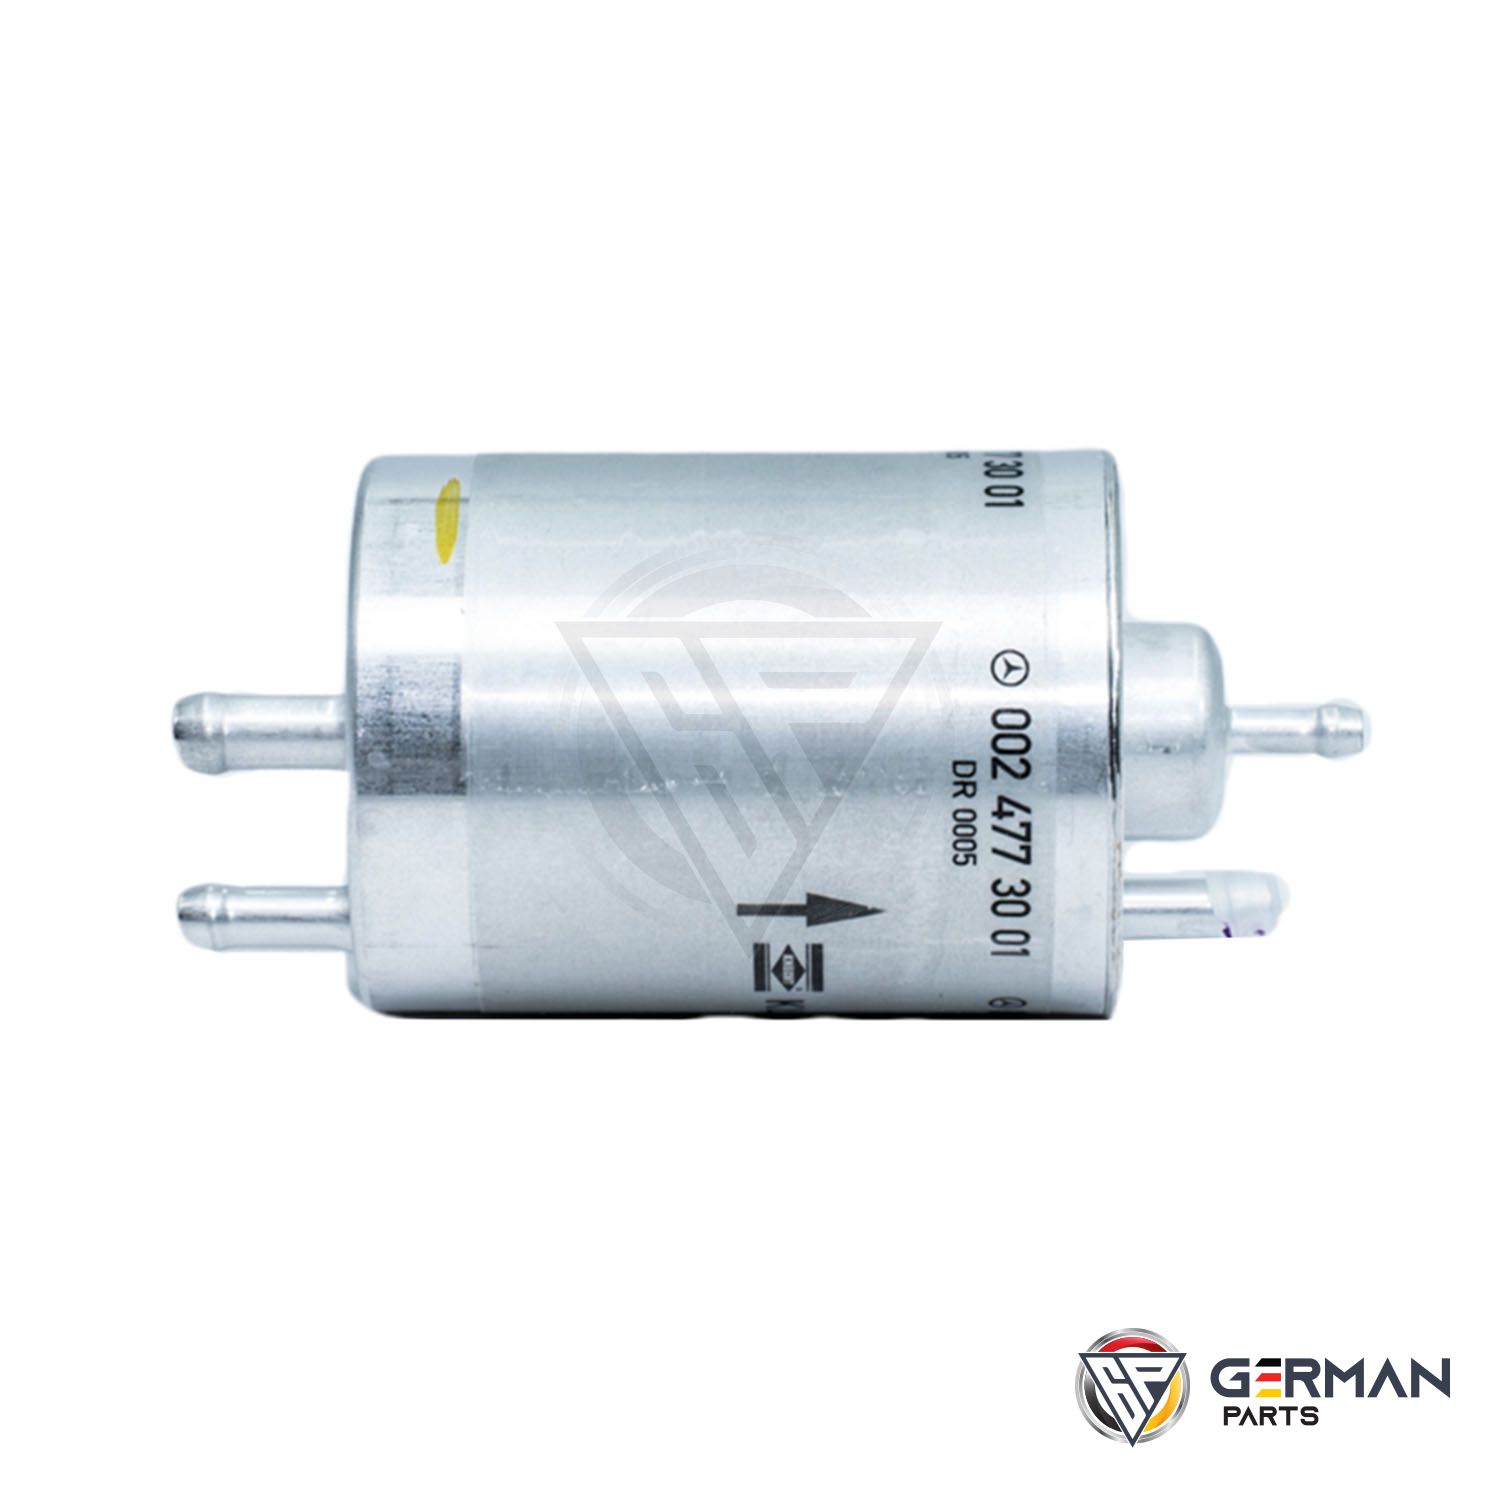 Buy Mercedes Benz Fuel Filter 0024773001 - German Parts